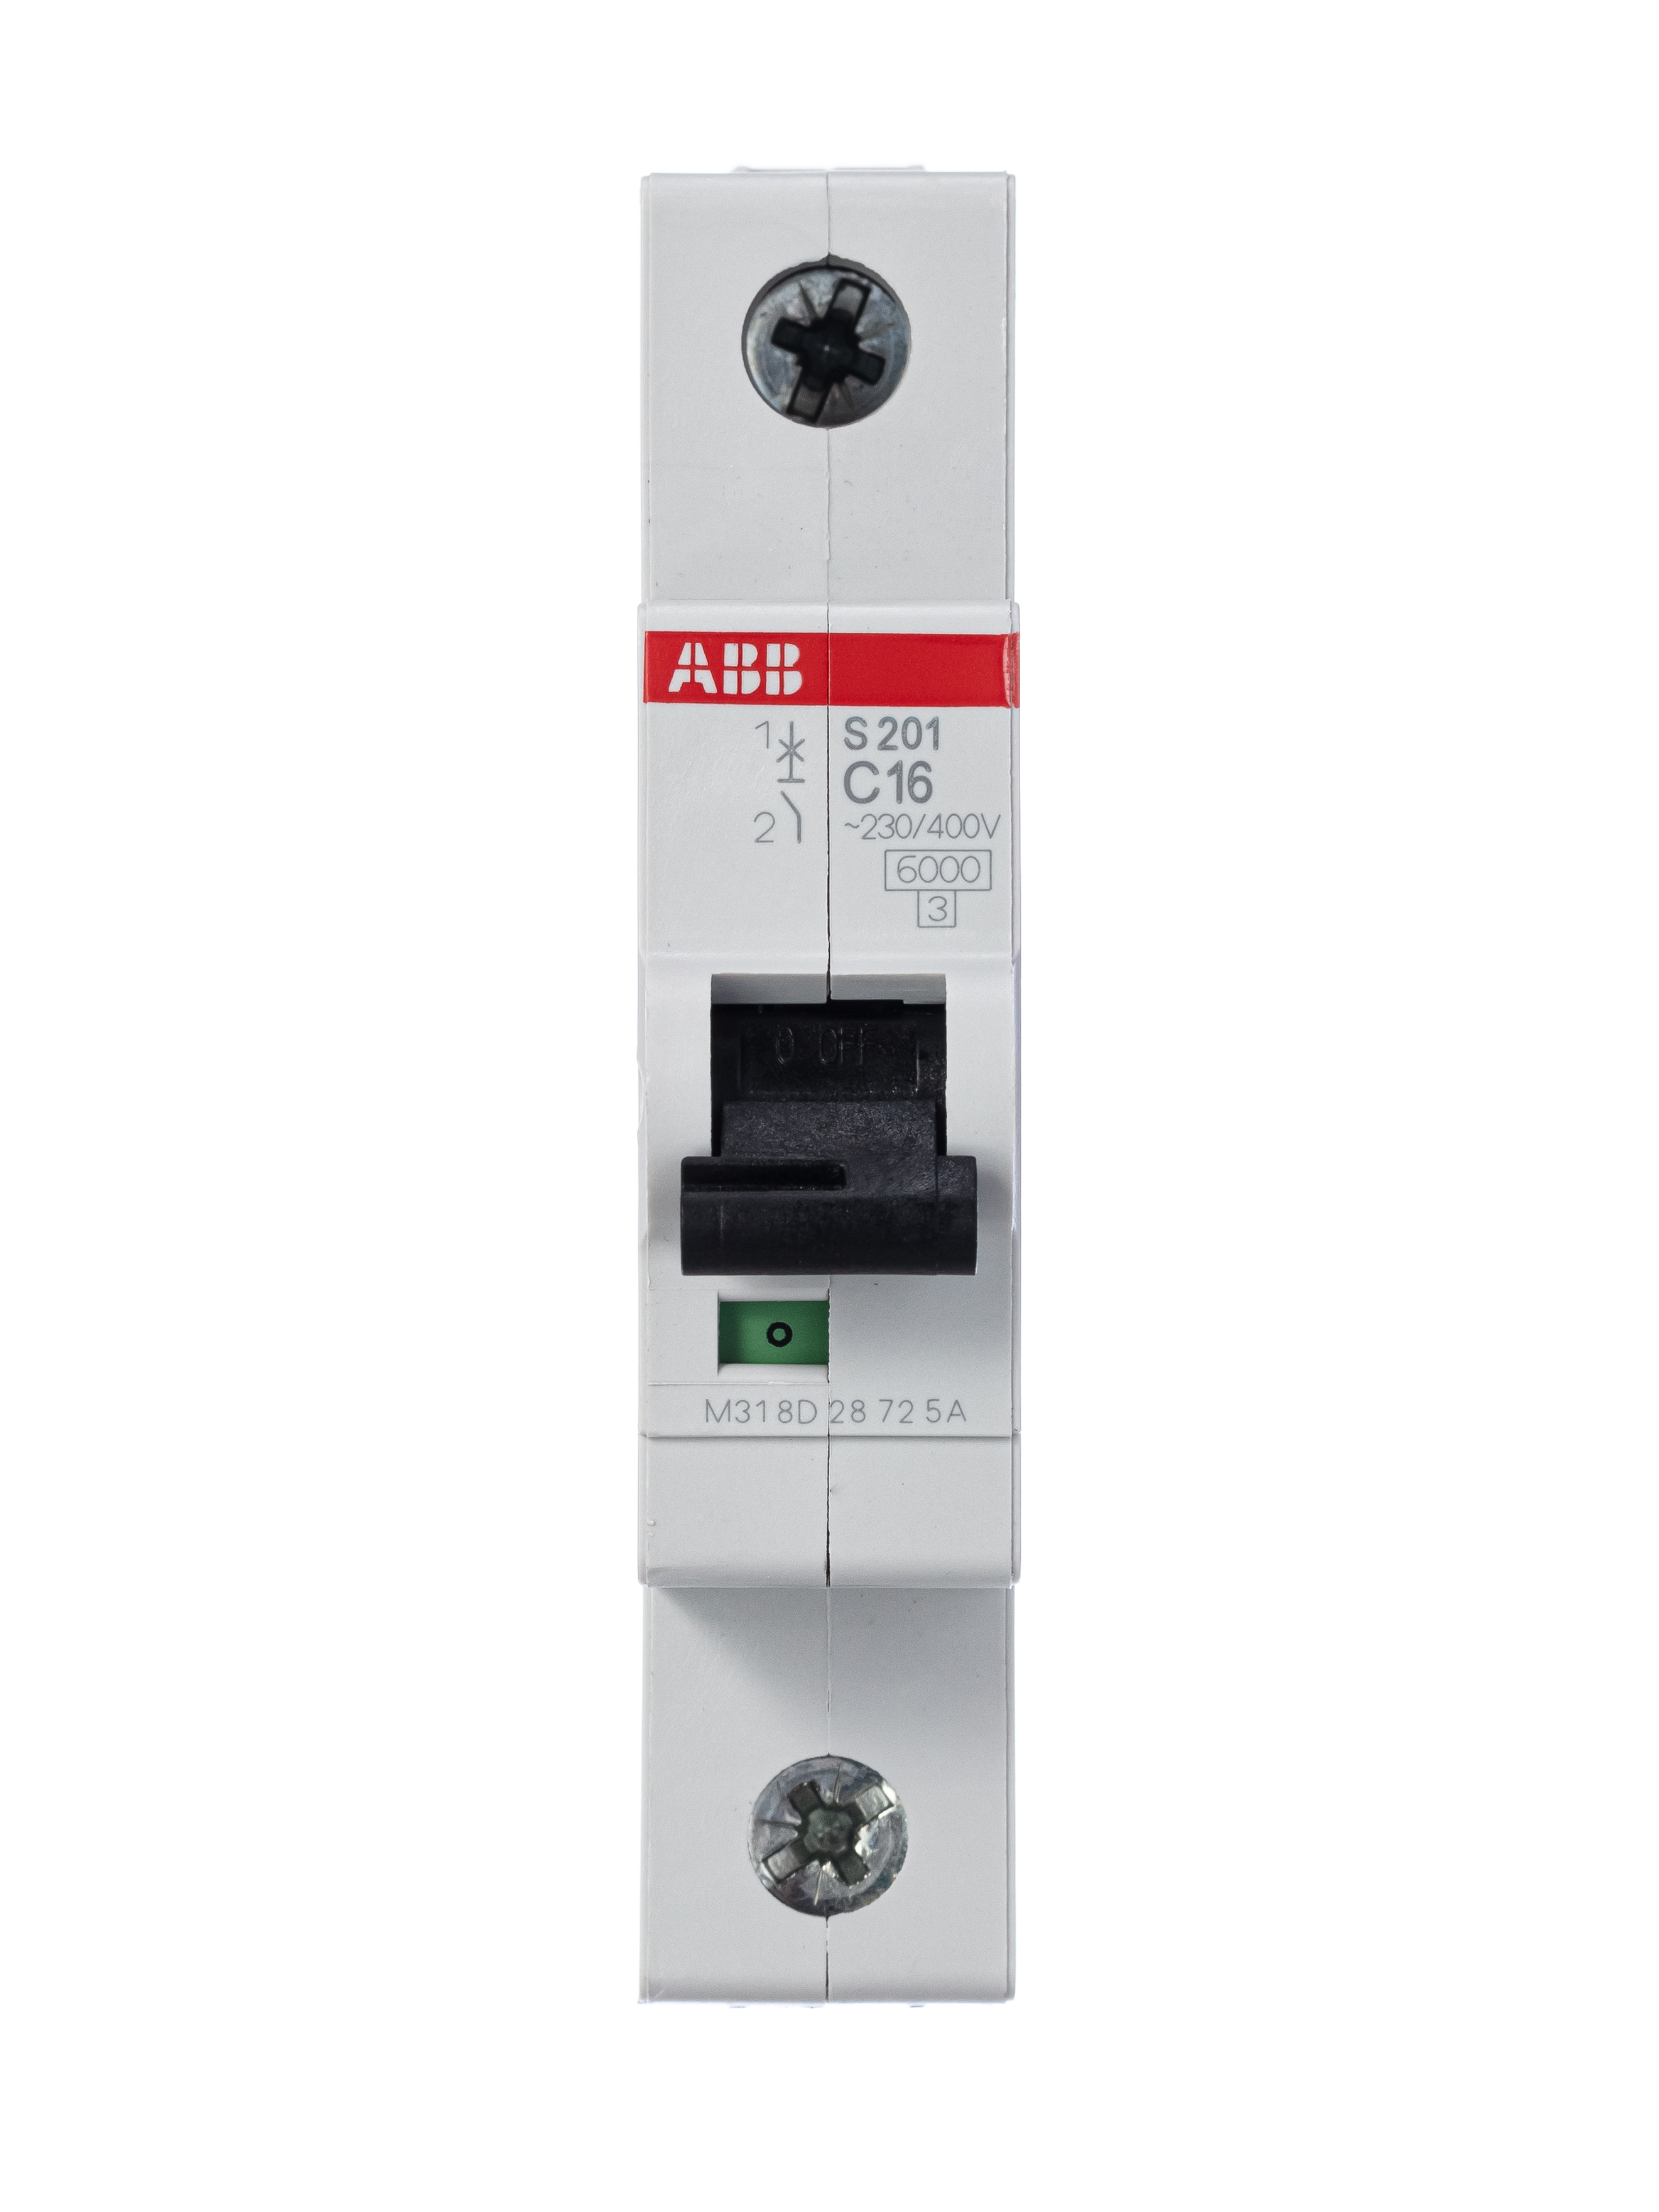 Автоматический выключатель abb 1 полюсный. Автоматический выключатель ABB s201. Автомат модульный ABB 1п c sh201l 4.5ка 16а 2cds241001r0164. ABB s201 c16. Автоматический однополюсный выключатель ABB s201.